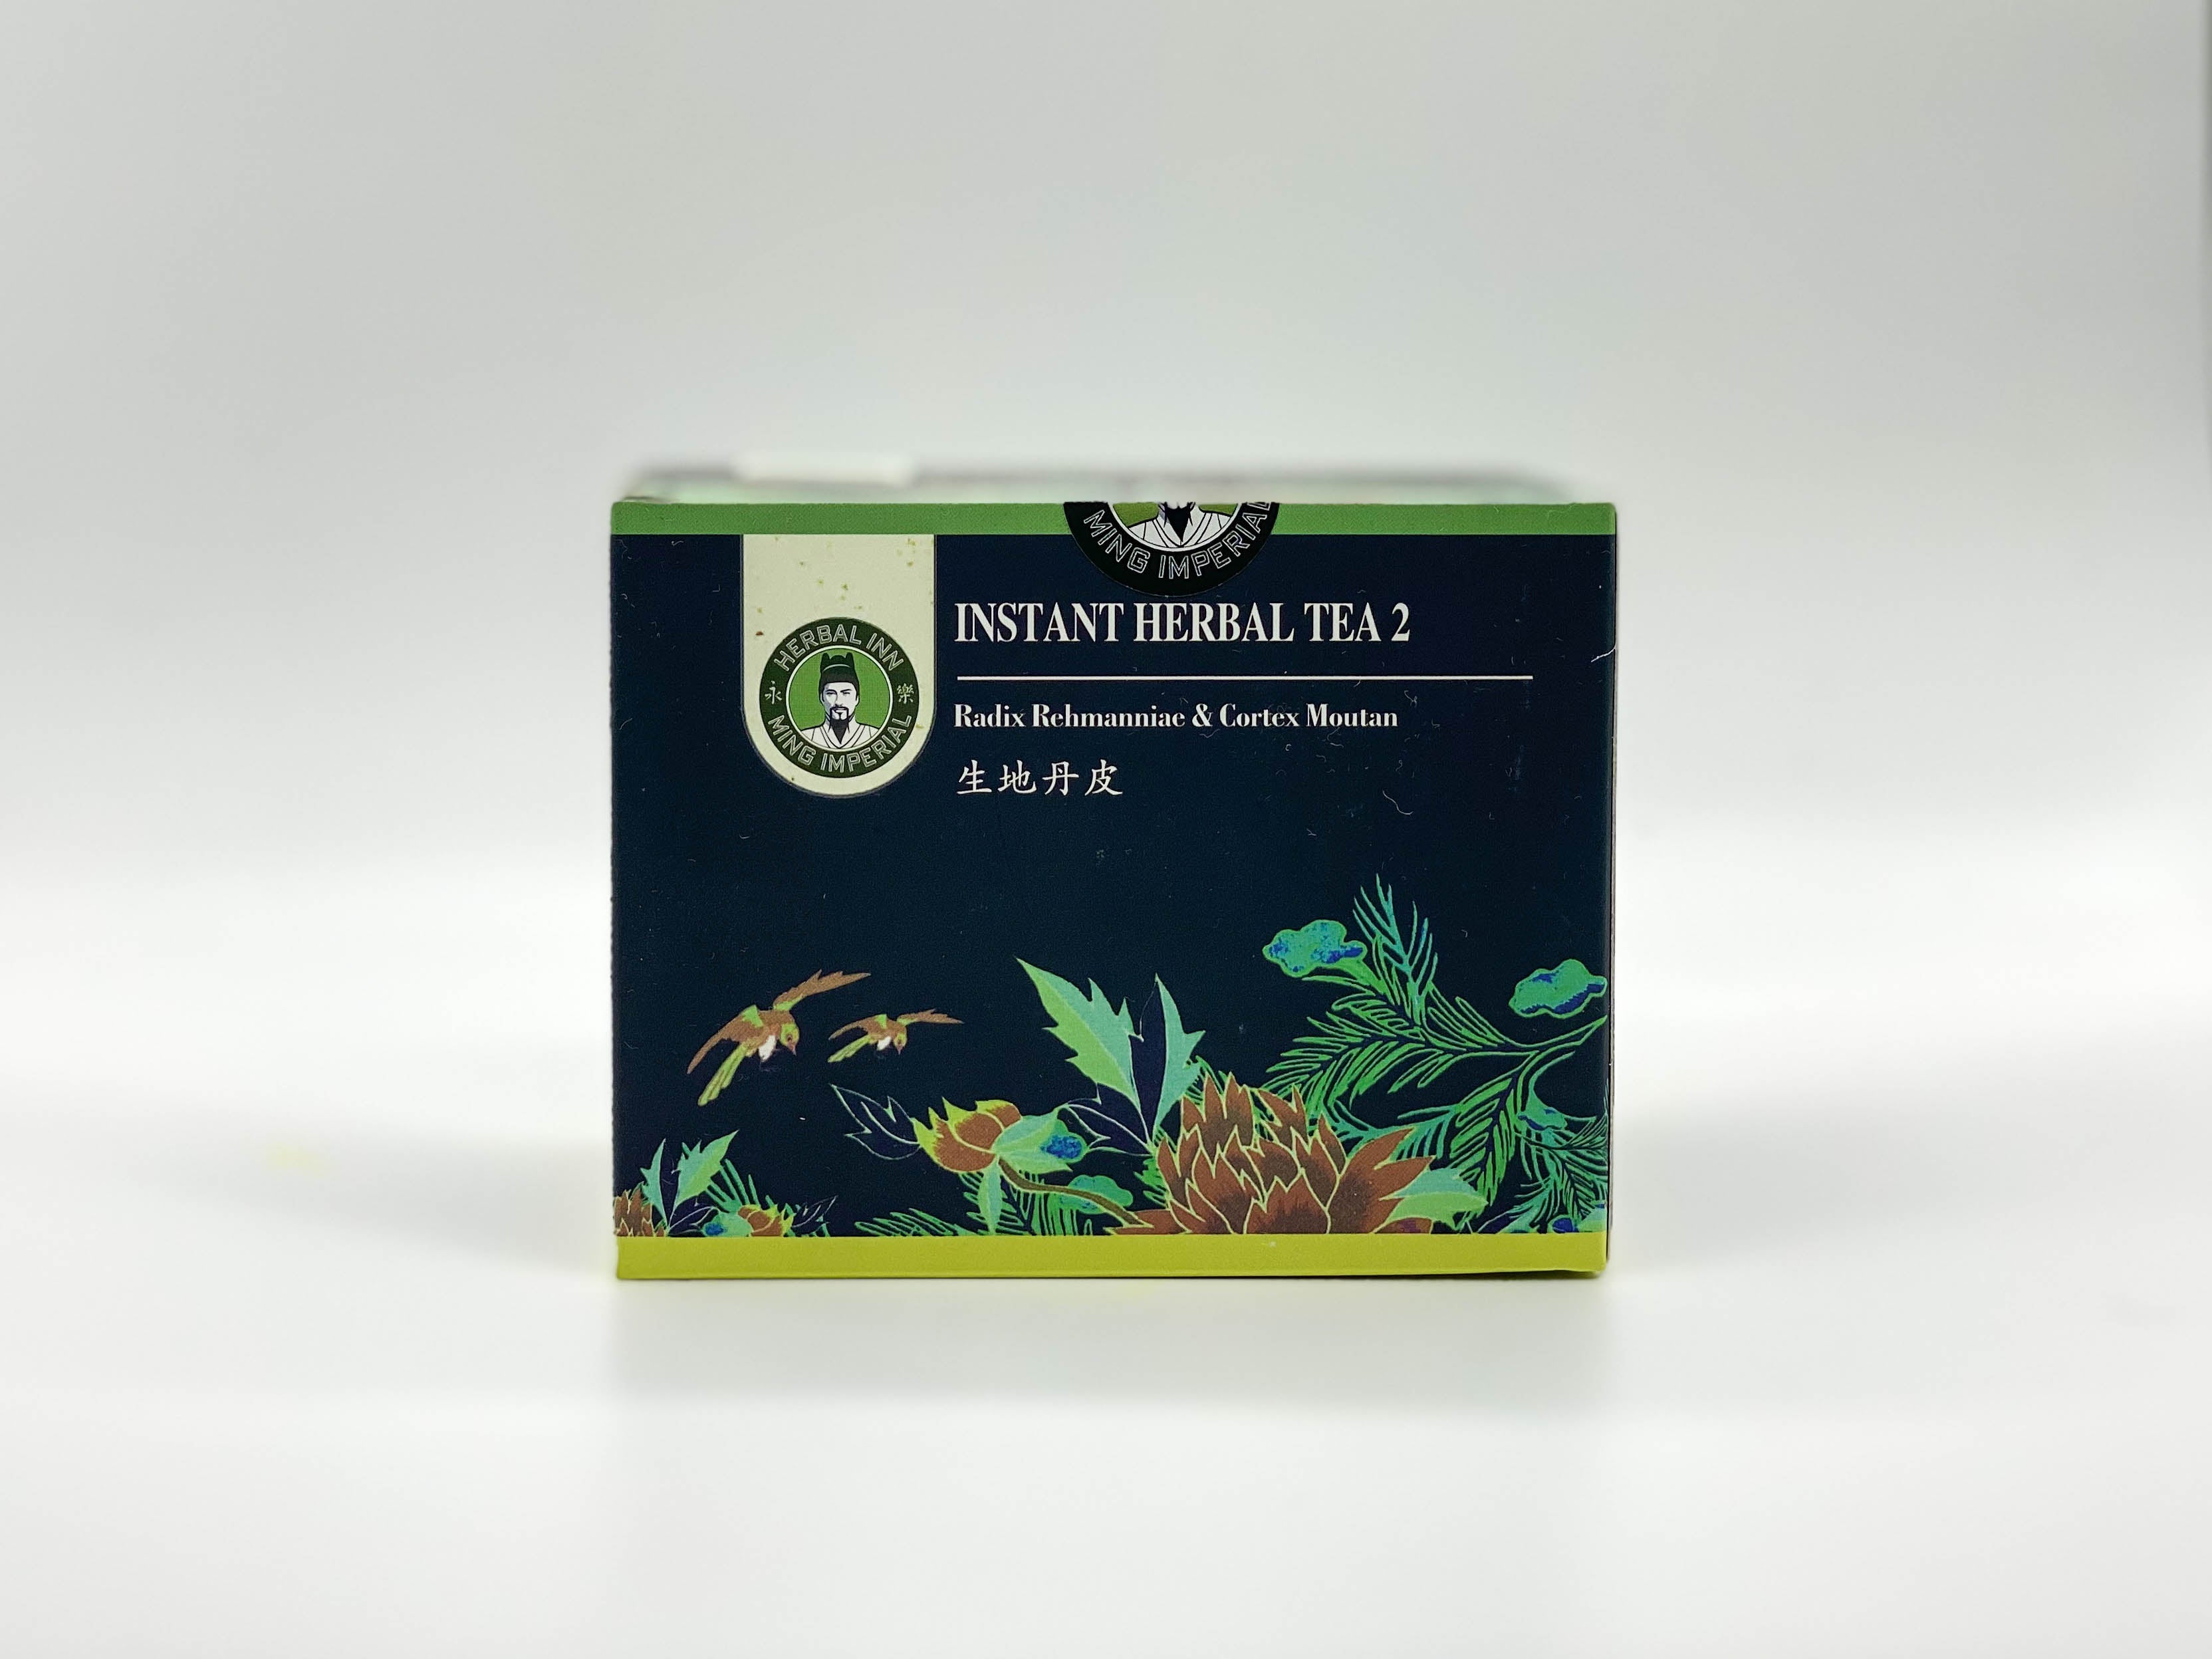 Instant Herbal Tea 2 - Radix Rehmanniae & Cortex Moutan